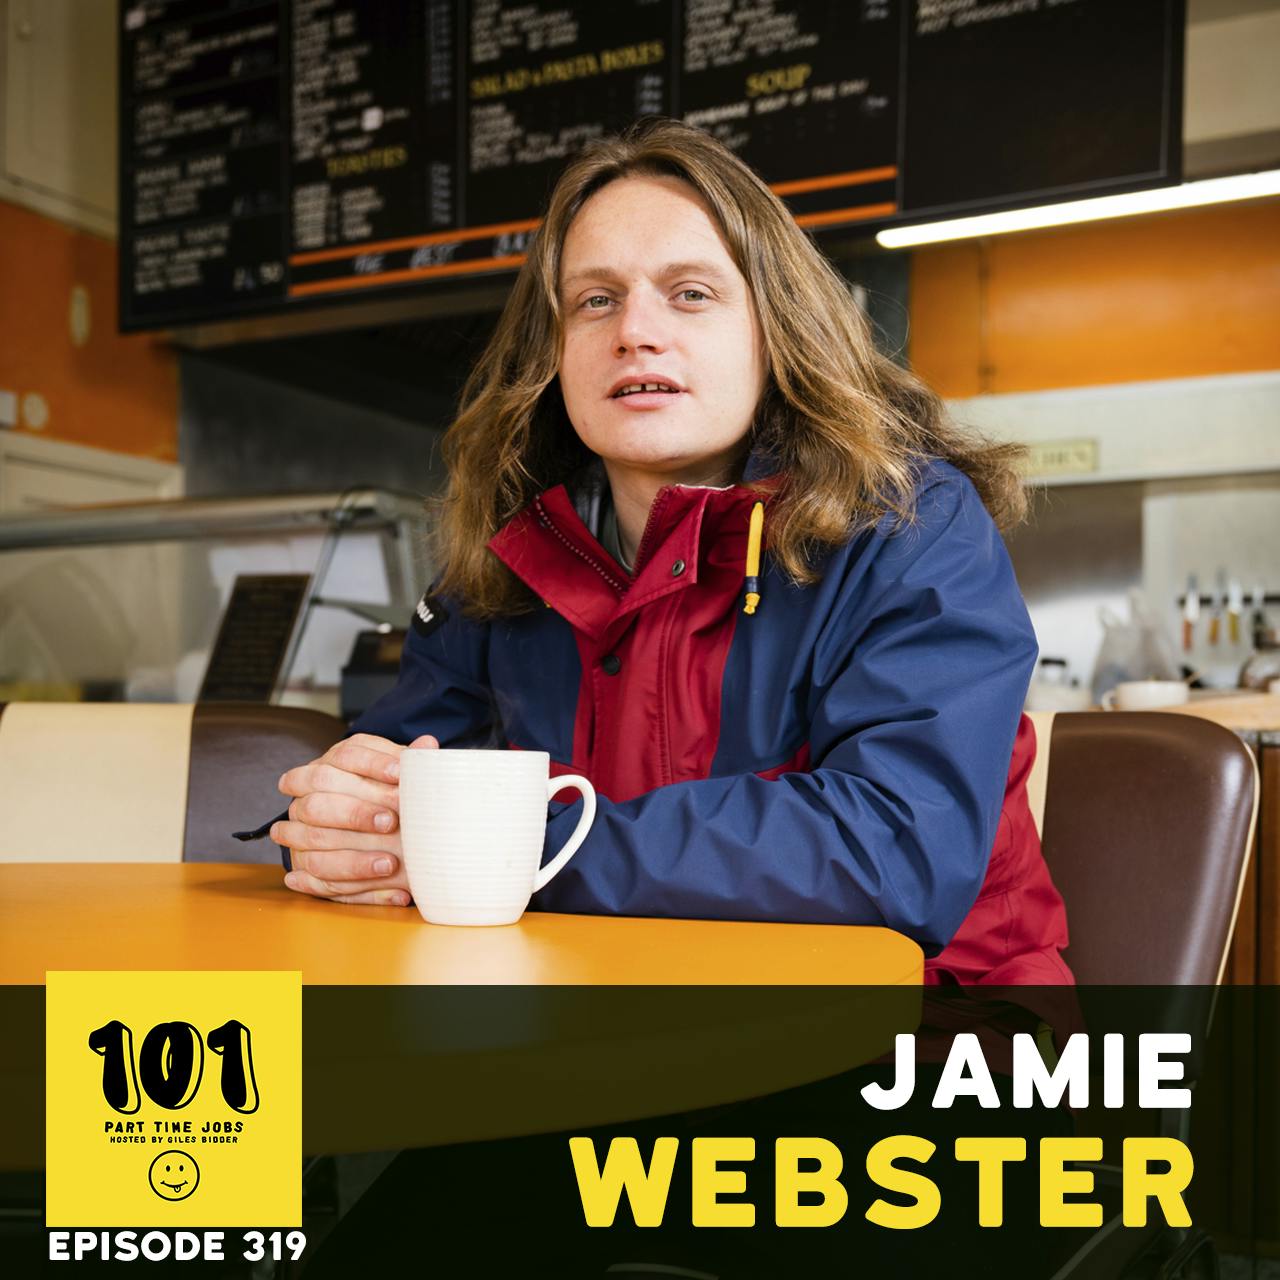 Jamie Webster - Celebrating with a packet of crisps